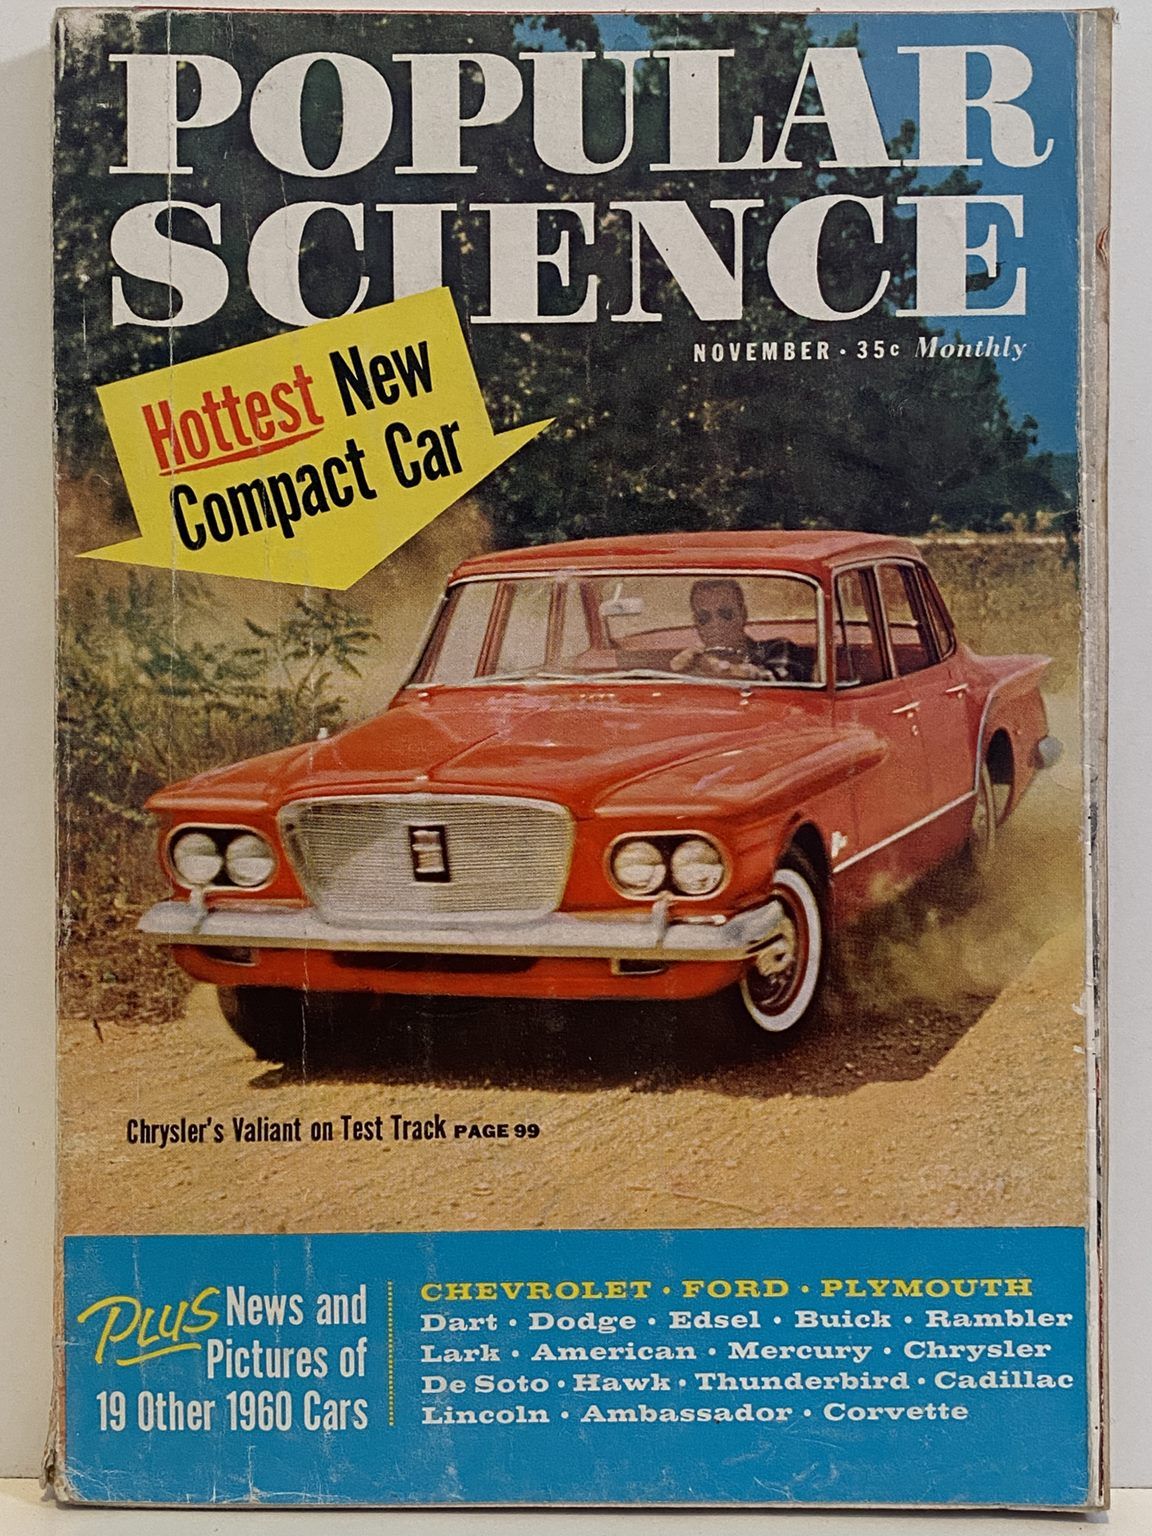 VINTAGE MAGAZINE: Popular Science, Vol. 175, No. 5 - November 1959